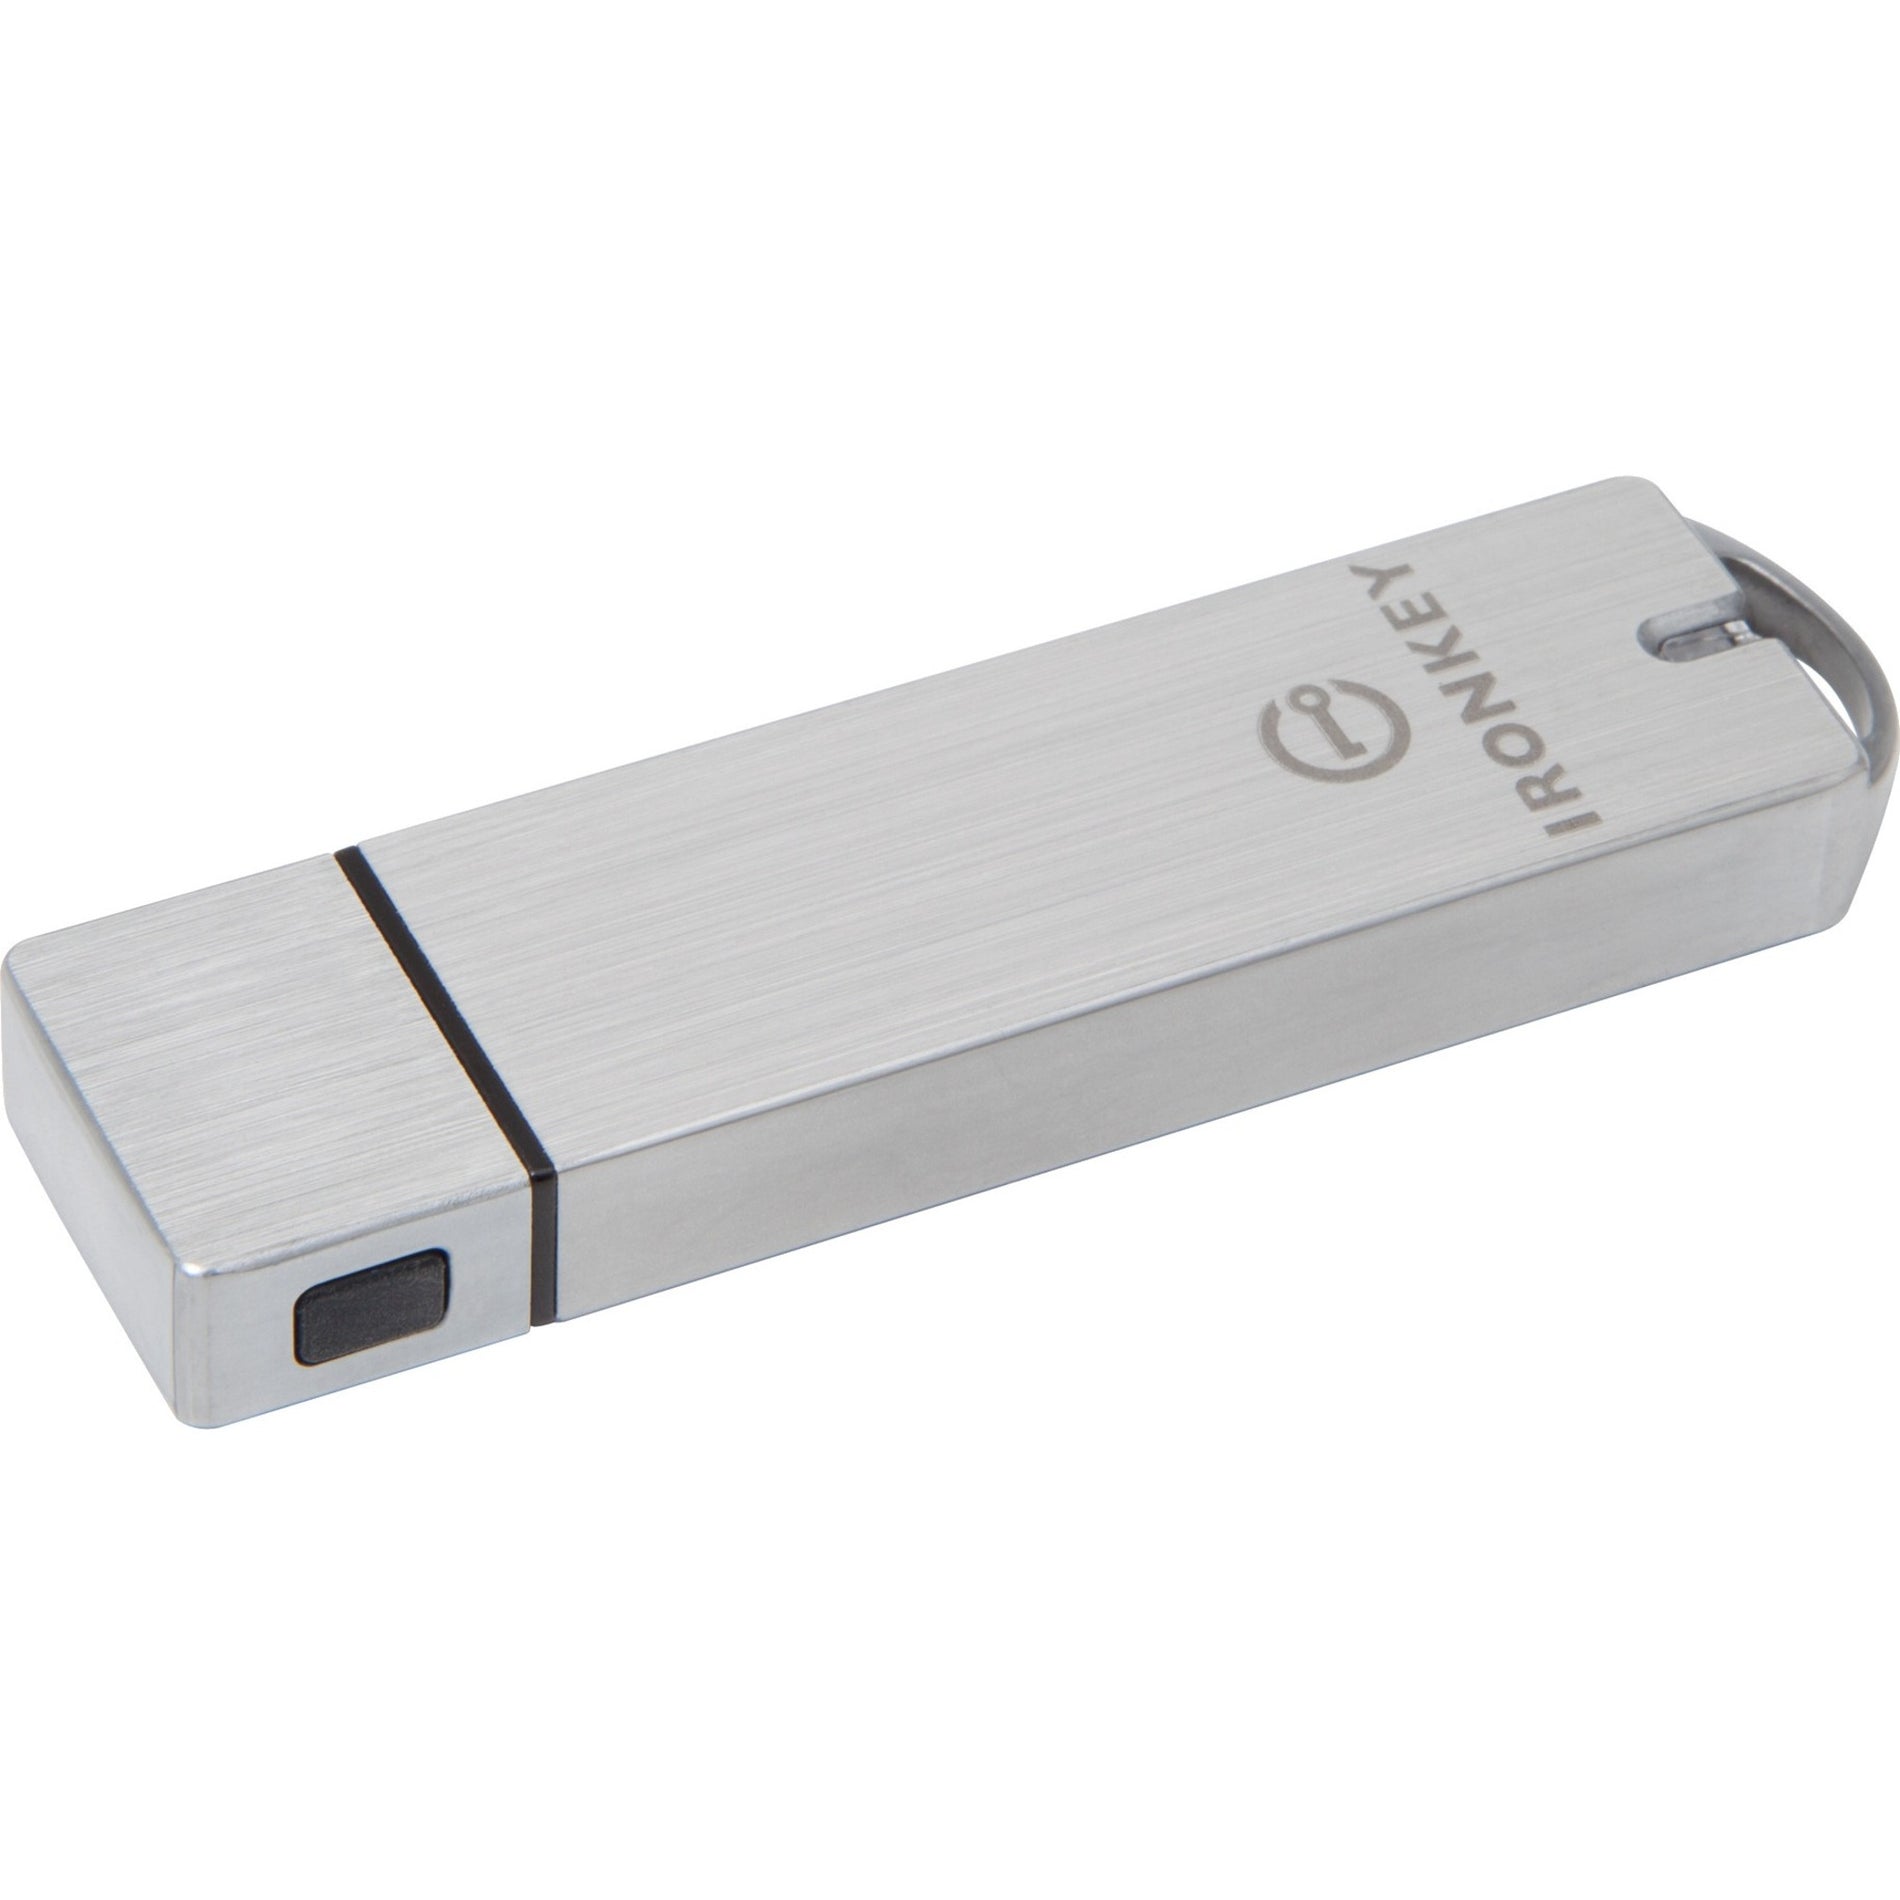 IronKey IKS1000B/16GB Basic S1000 Encrypted Flash Drive, 16GB USB 3.0, 256-bit AES